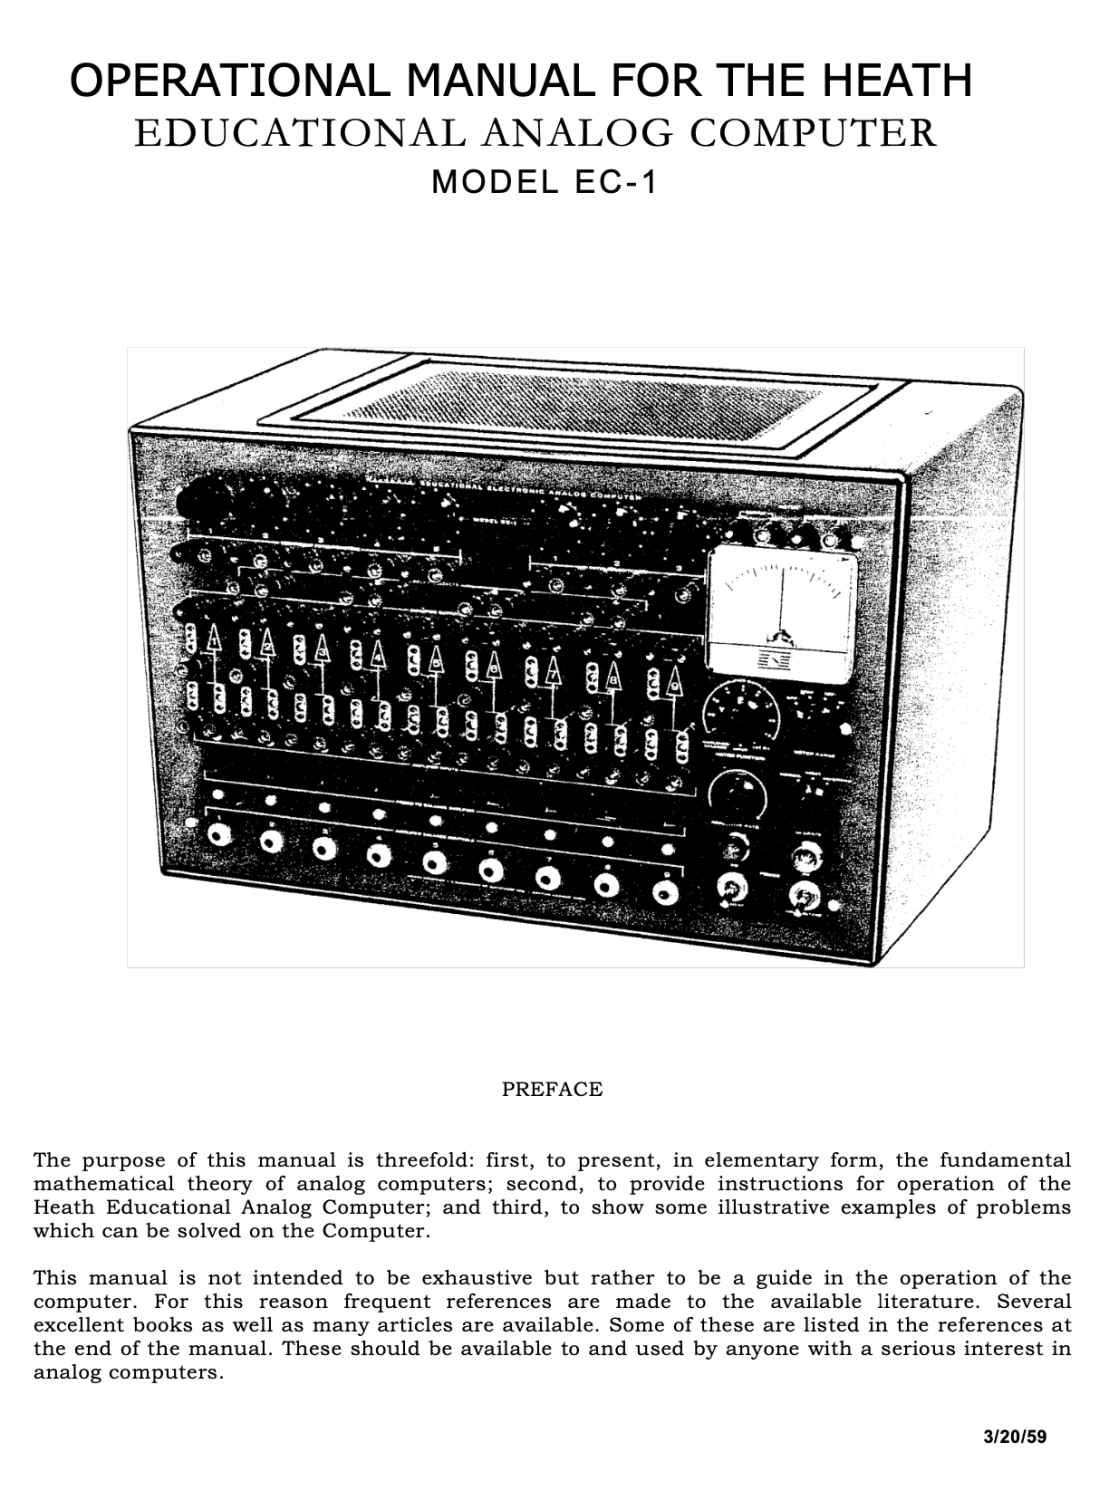 Heathkit EC-1 Educational Analog Computer - Instruction Manual